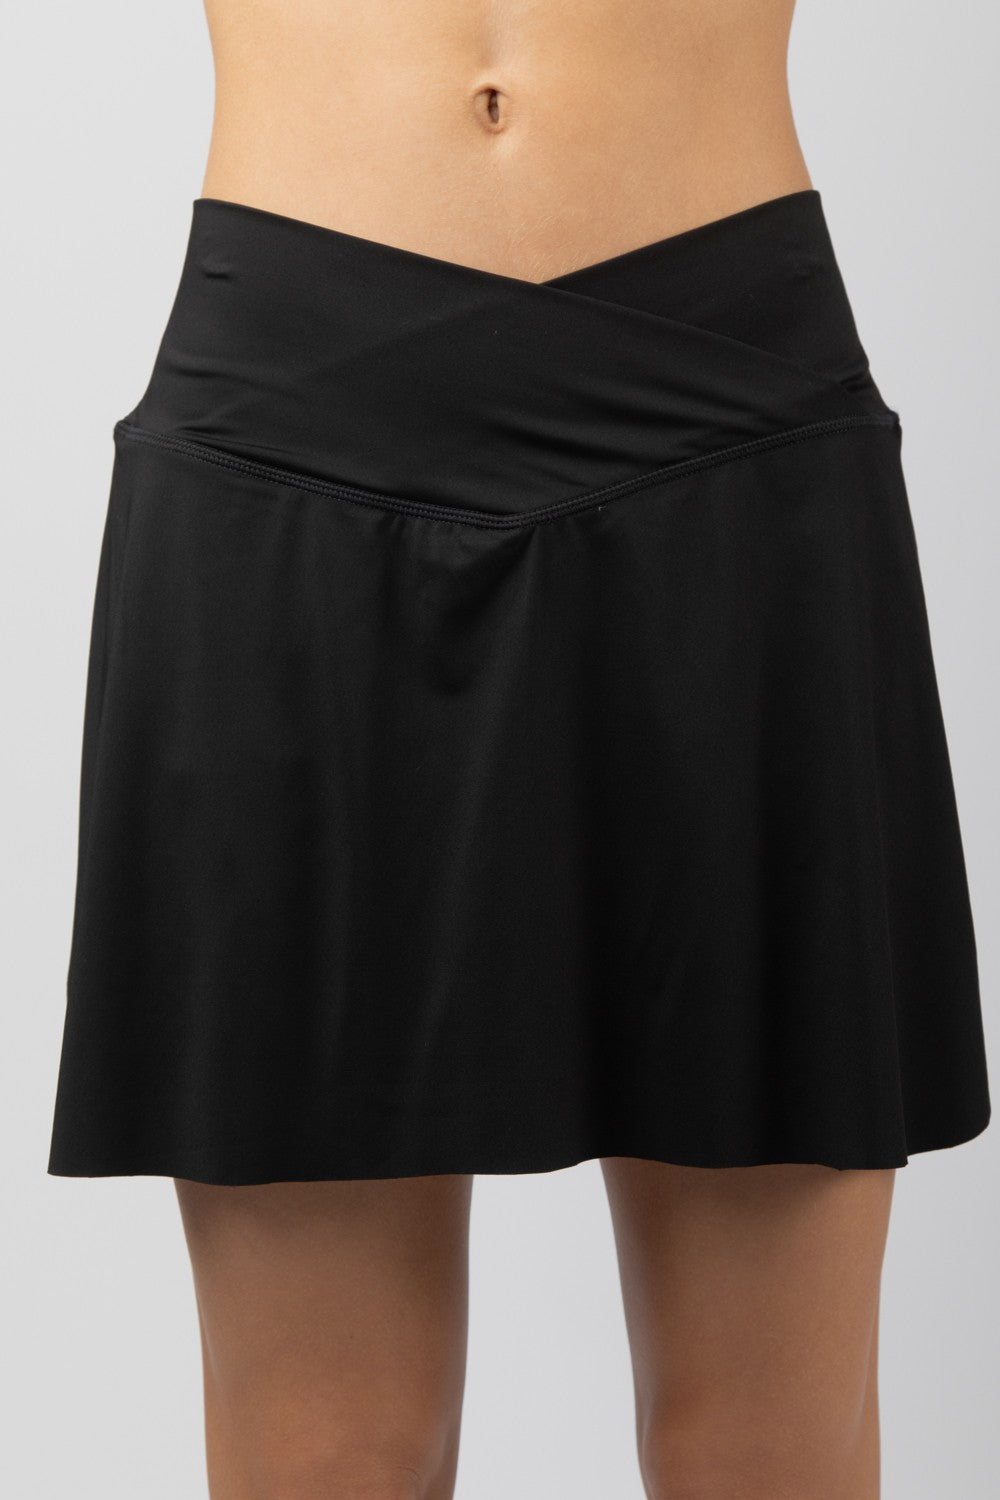 Crossover Waist Athletic Skirt